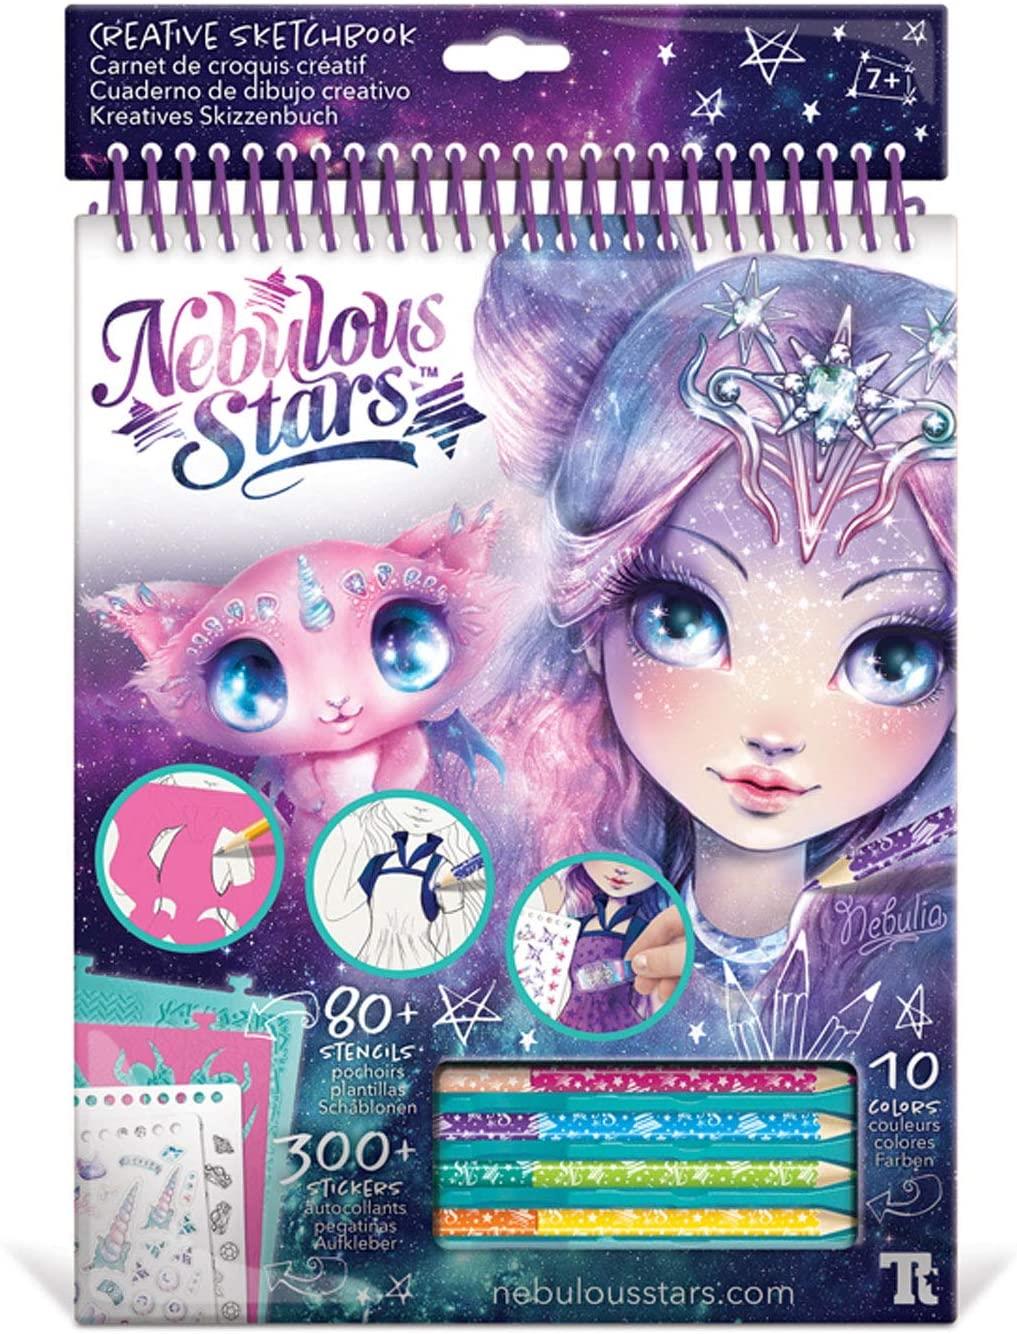 Nebulous Stars Nebulia's Creative Sketchbook